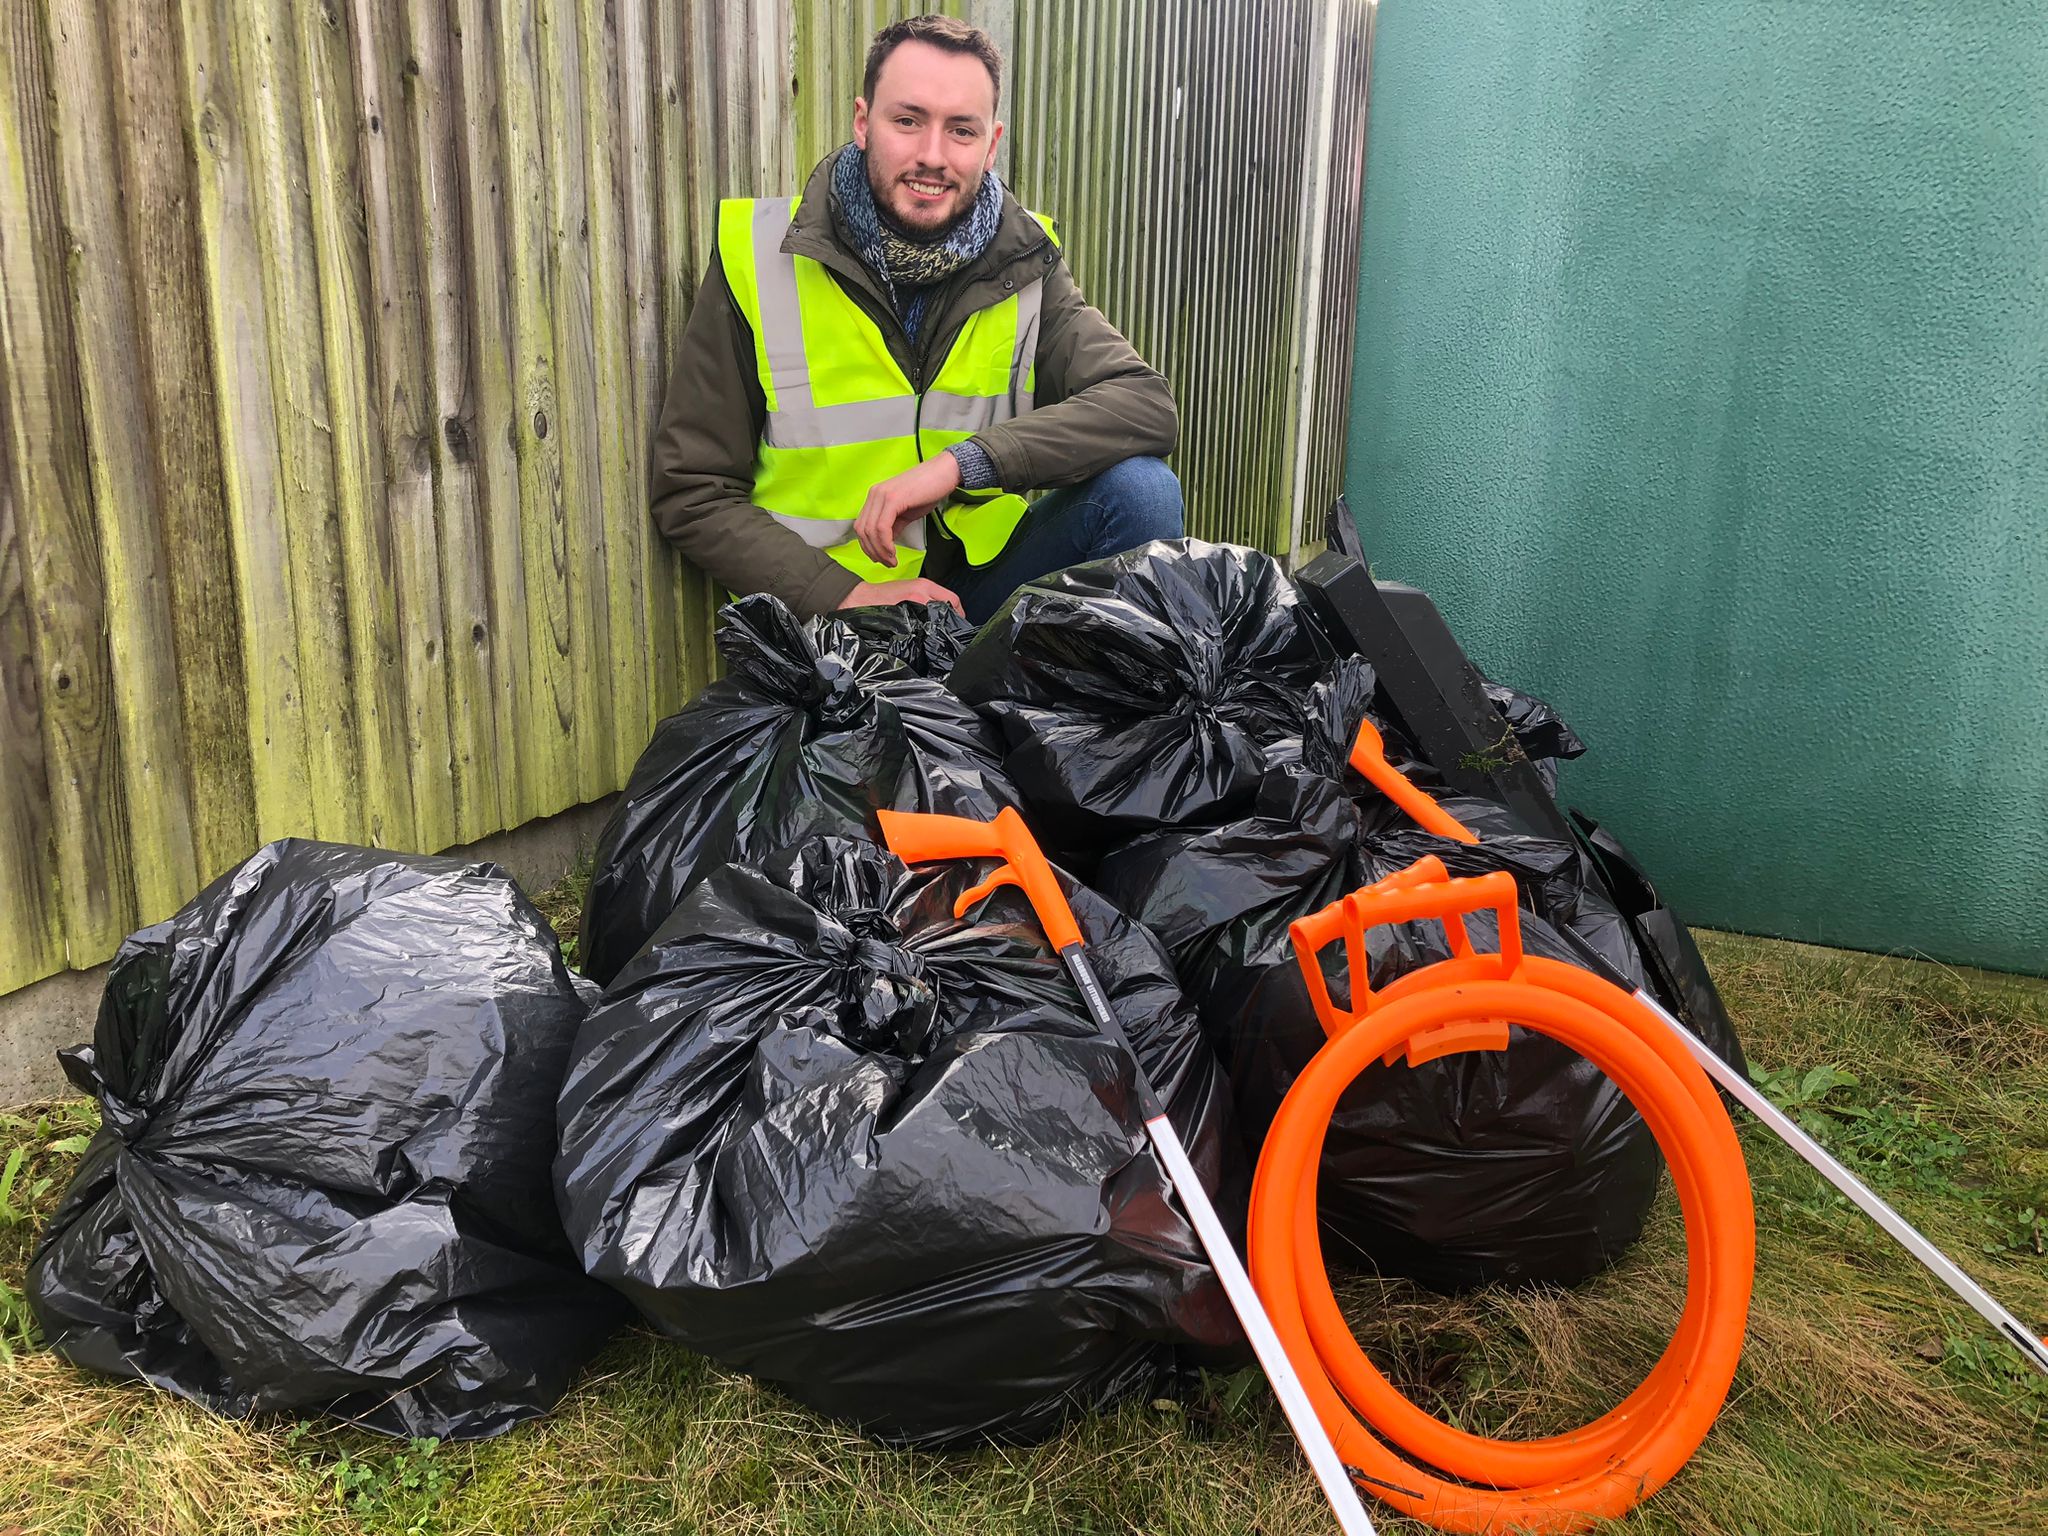 Parish councillor Matt Nightingale picks litter